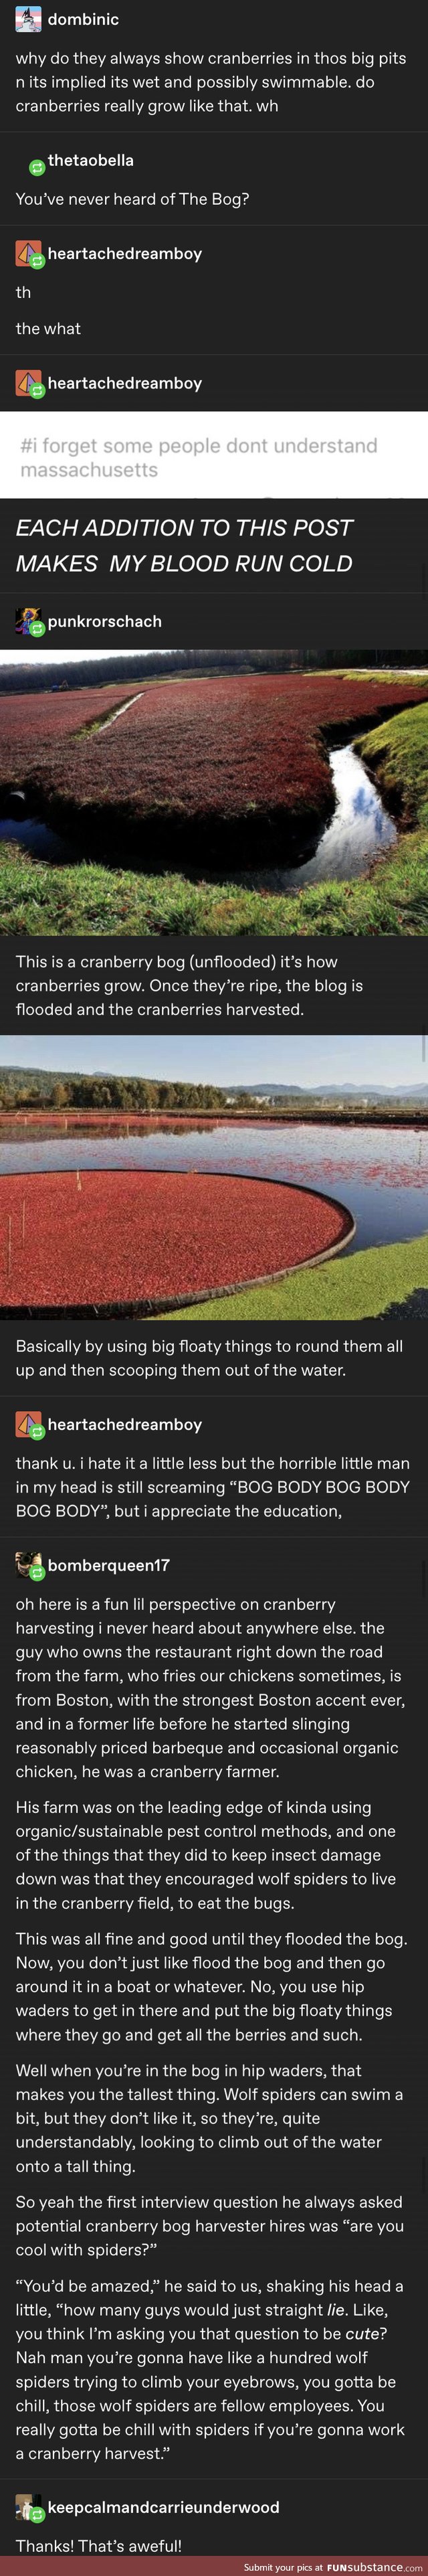 Burn the cranberry bogs